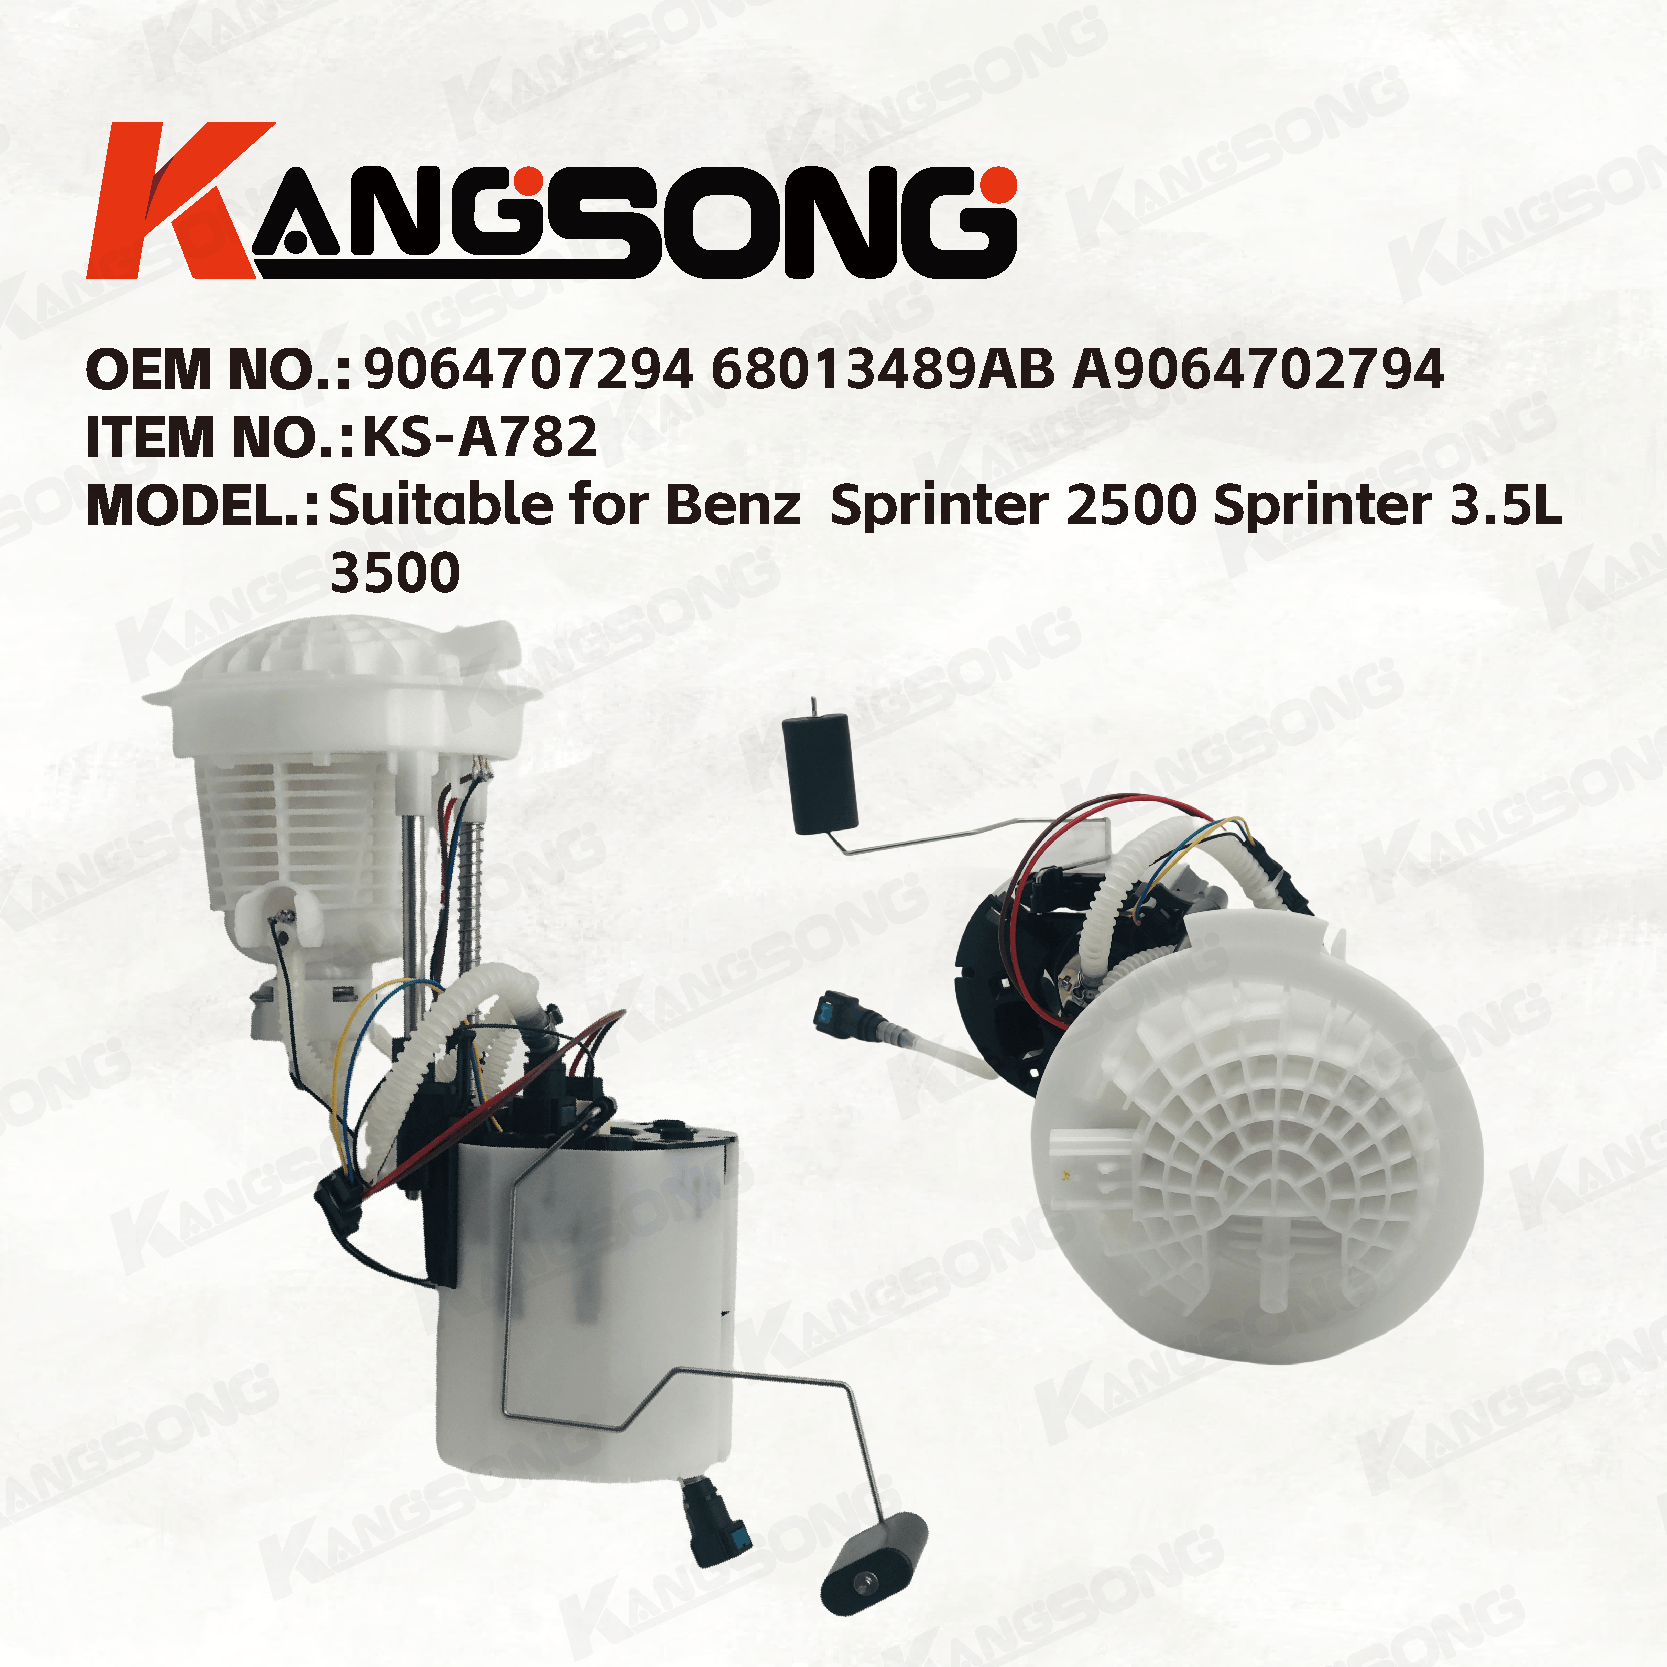 Applicable to Mercedes-Benz  Sprinter 2500 Sprinter 3.5L 3500 2007-2008 /9064707294 68013489AB A9064702794/ Fuel Pump Assembly/KS-A782